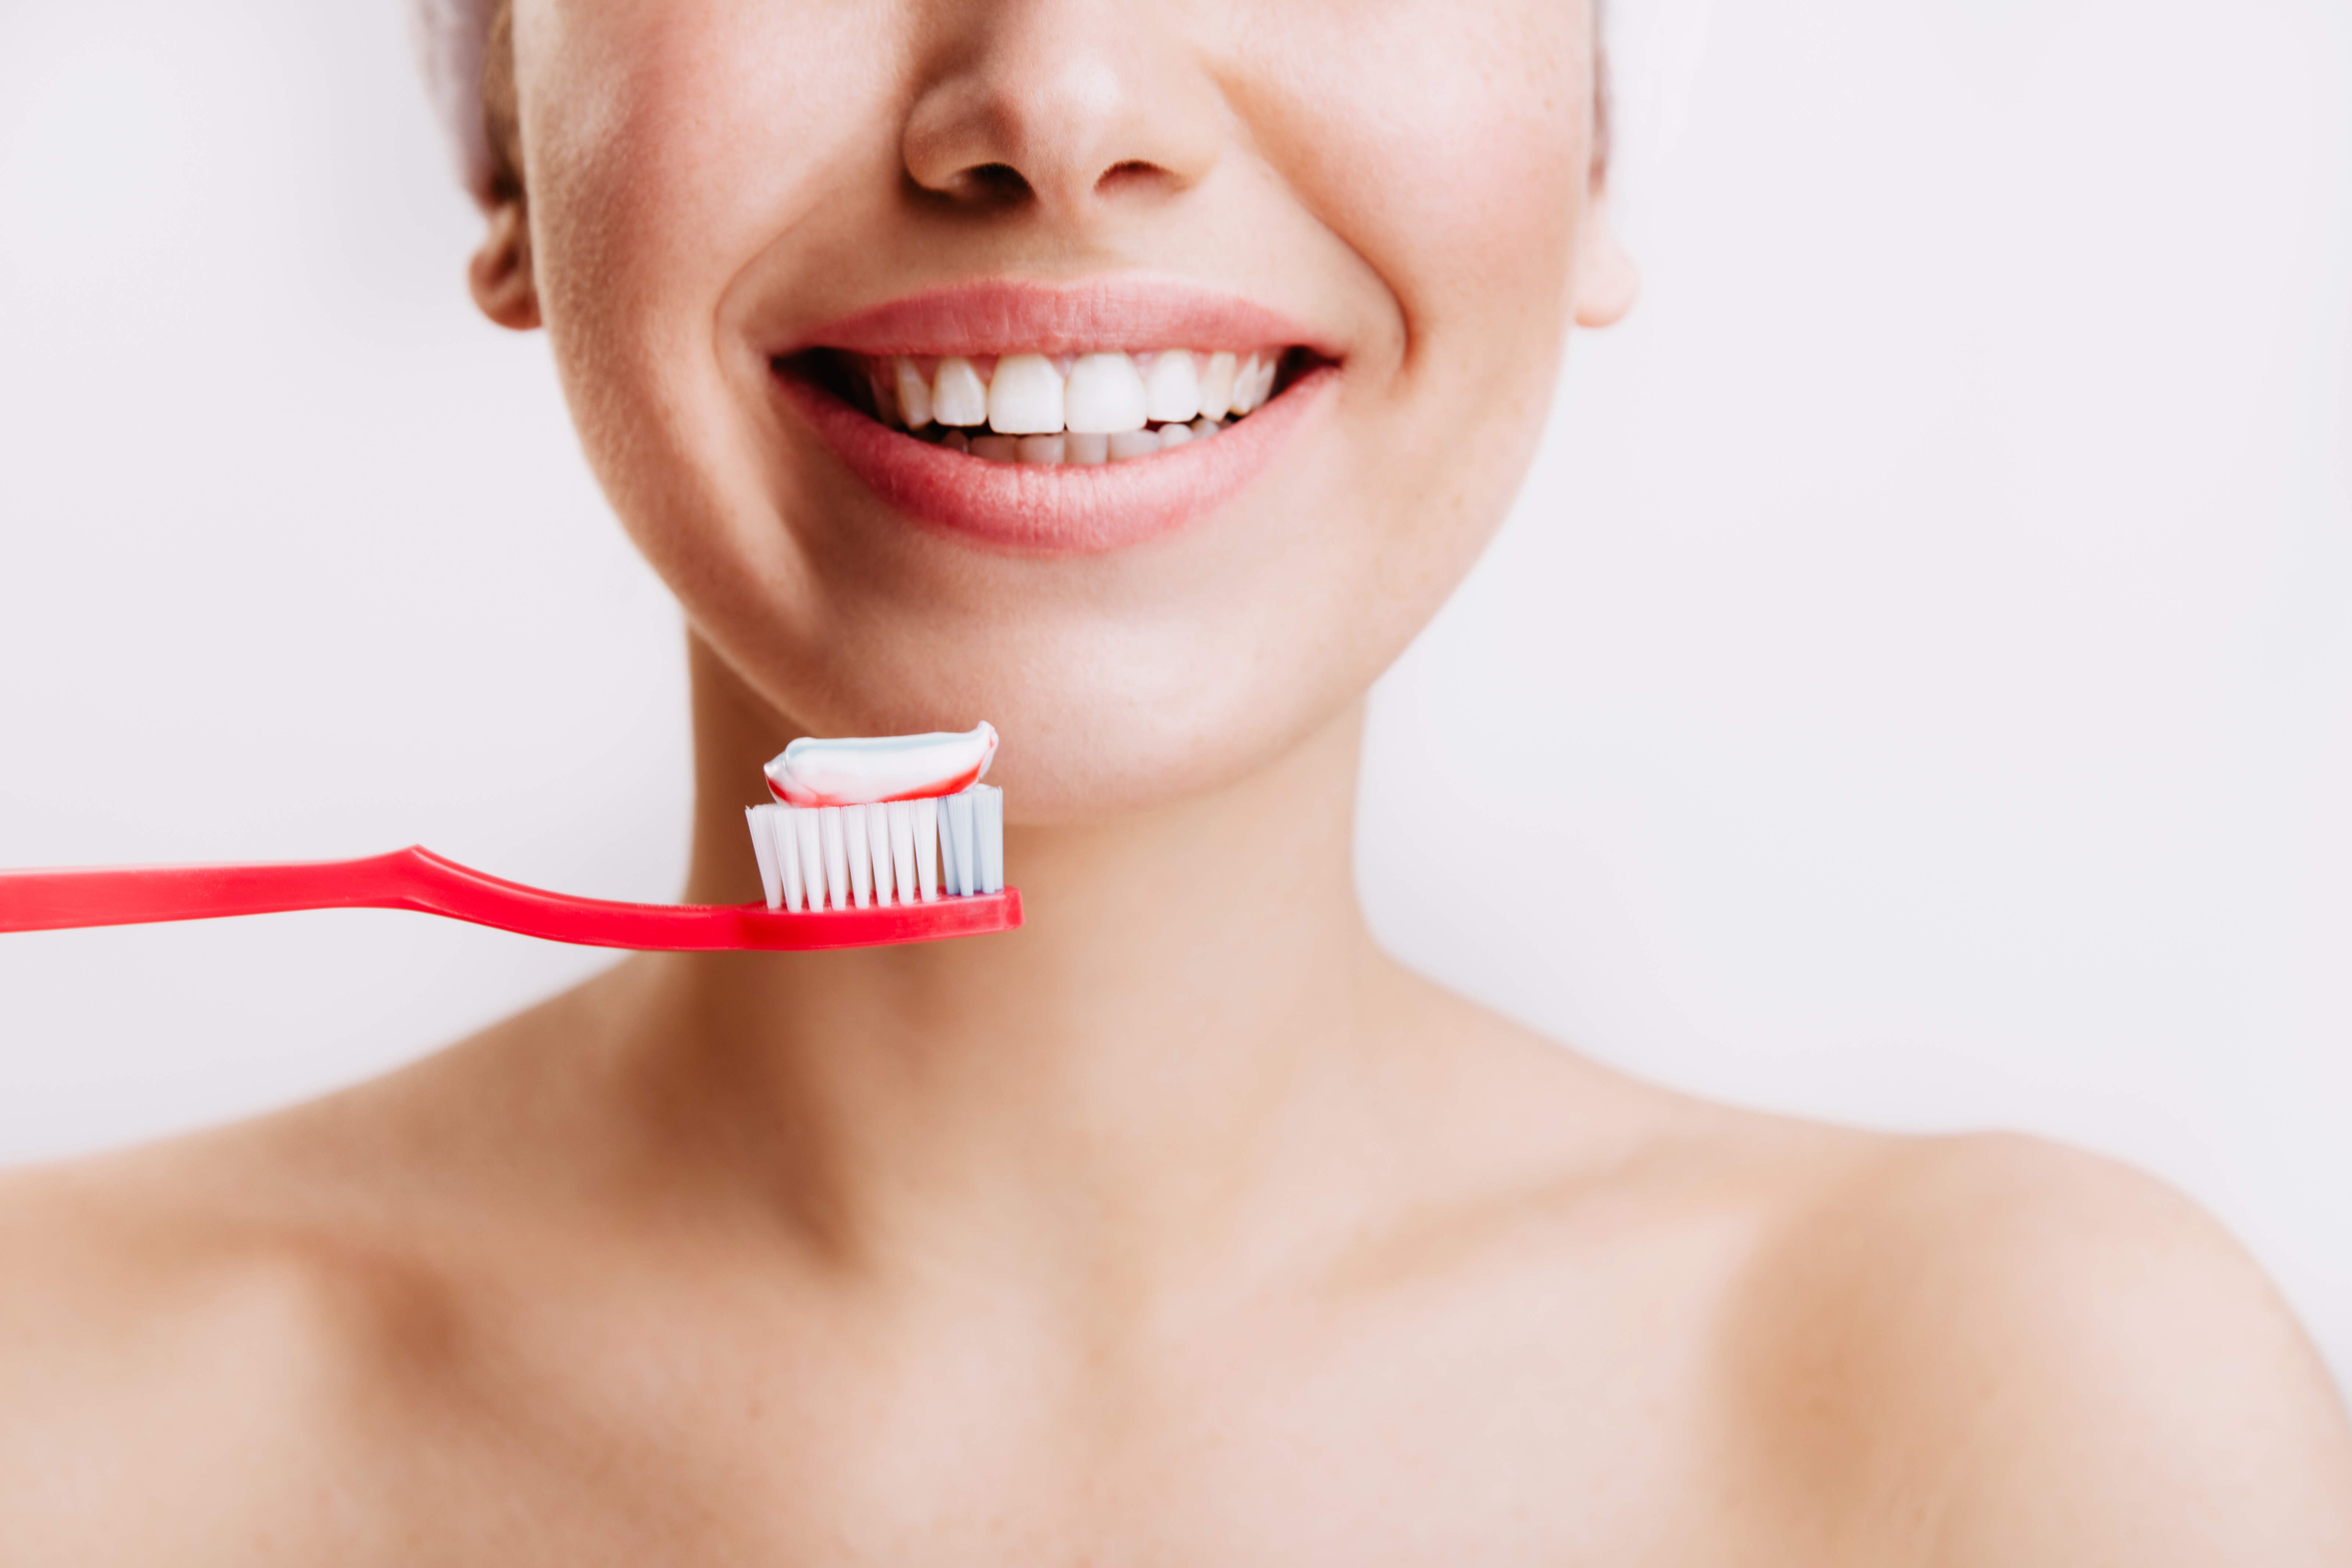 Cepillo dental eléctrico contra cepillo manual, ¿Cuál es mejor?